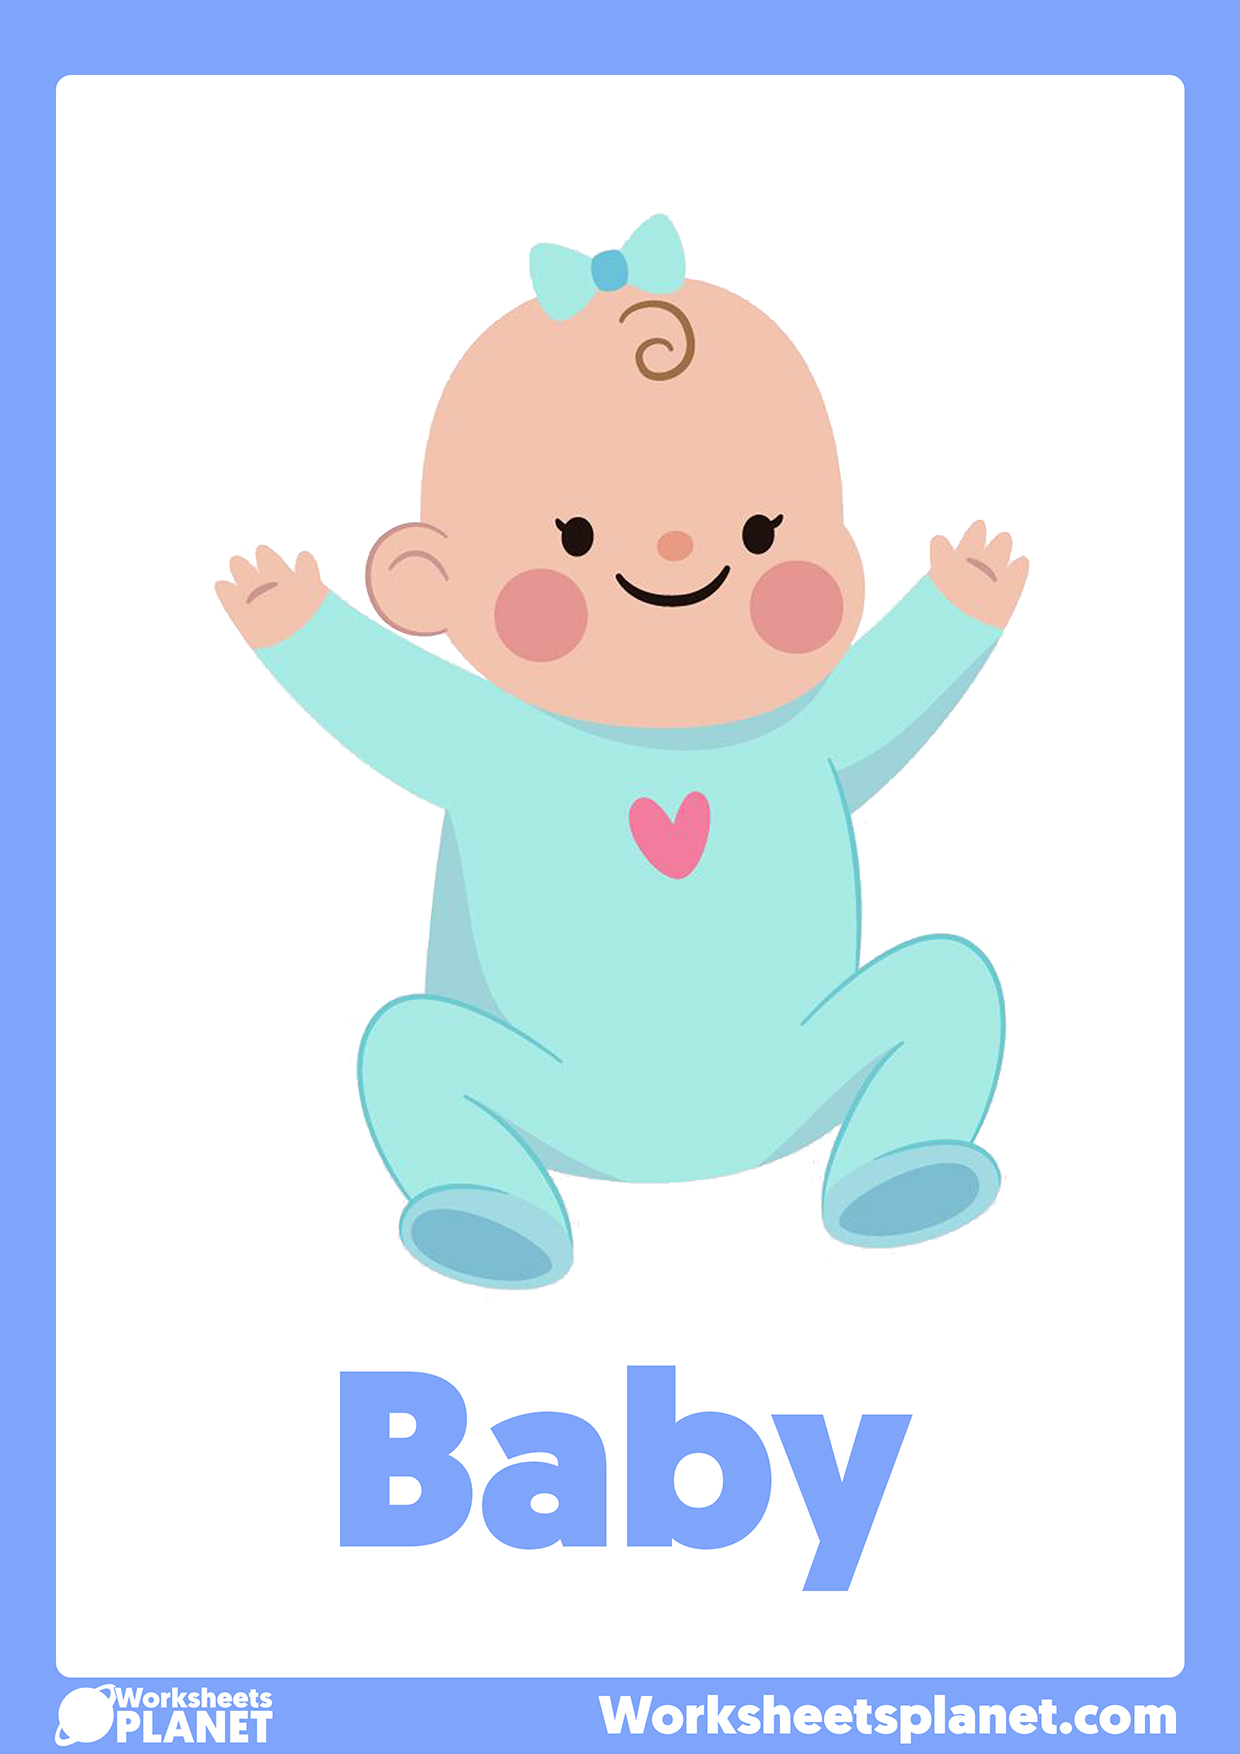 Baby Flashcard